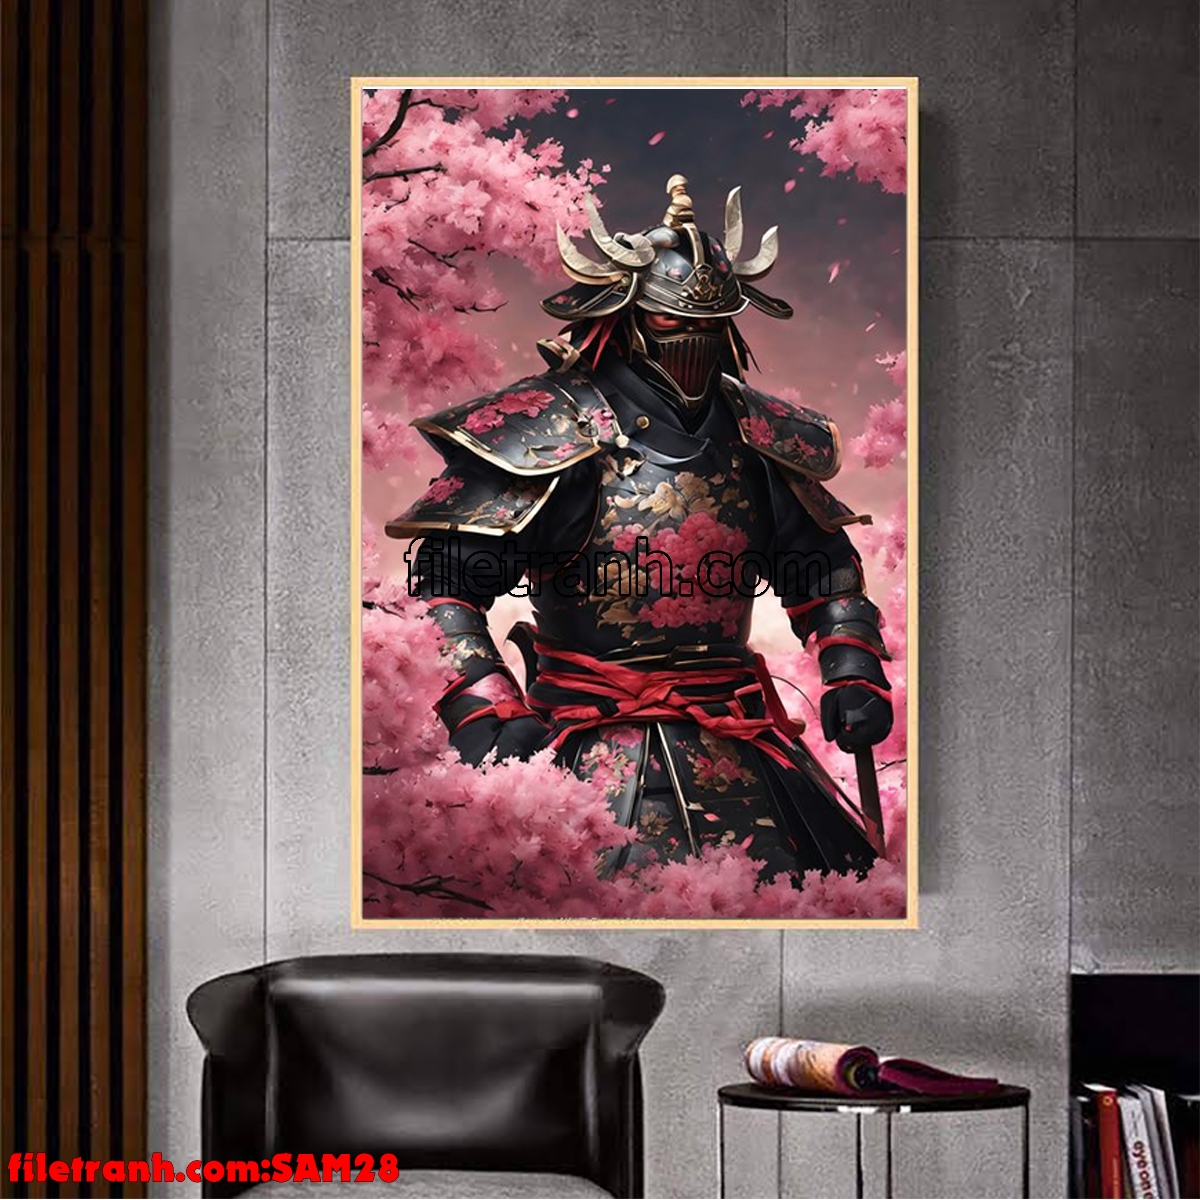 https://filetranh.com/tuong-nen/file-tranh-samurai-vo-si-nhat-ban-sam28.html